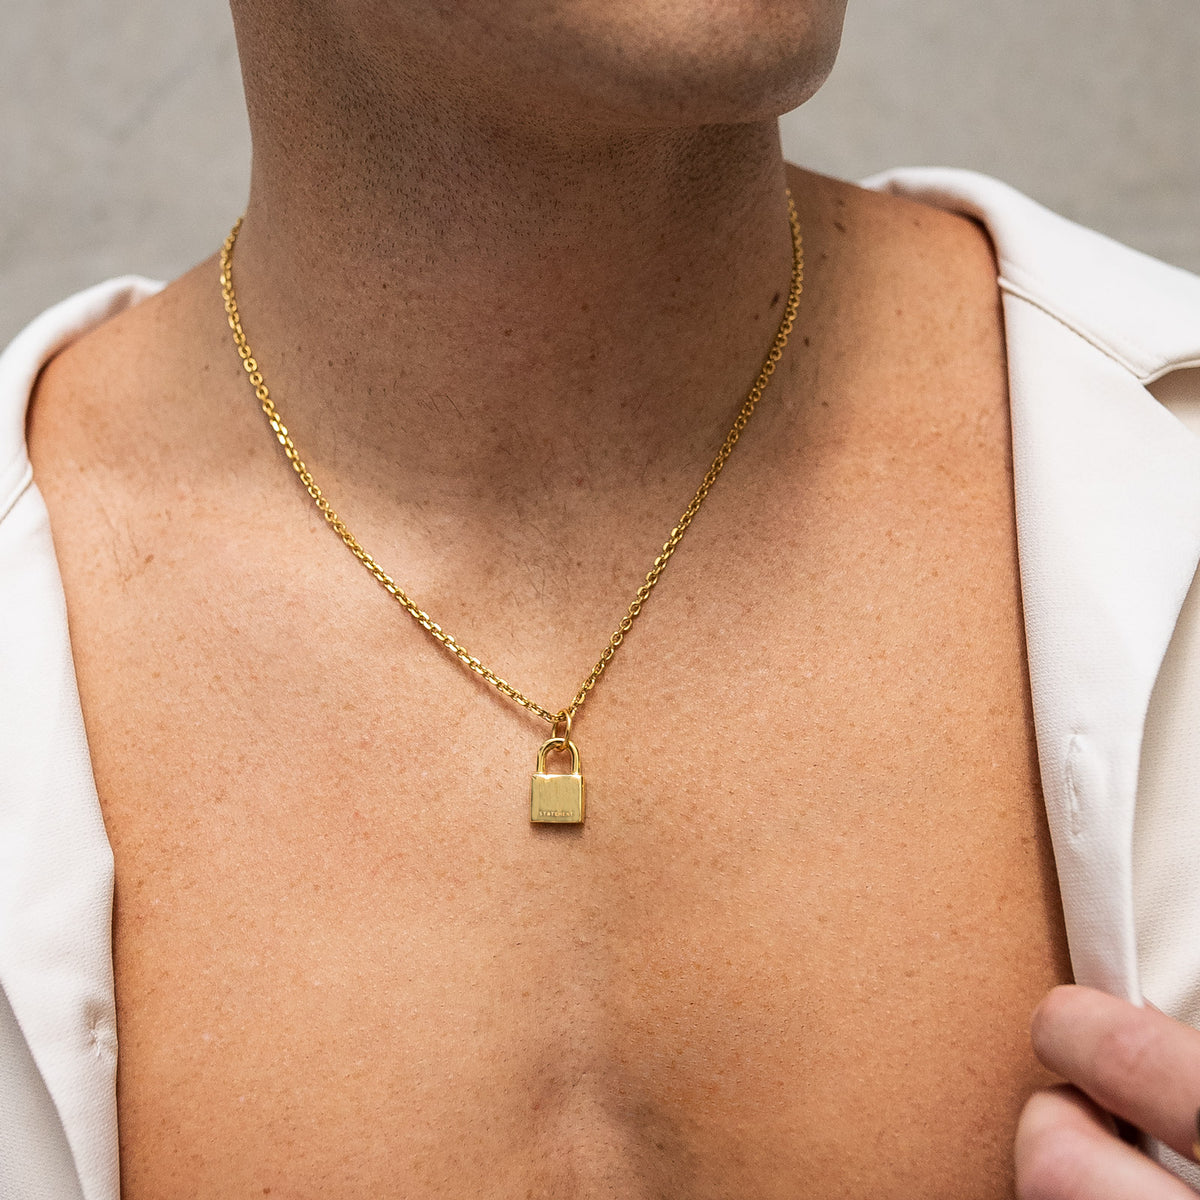 Mens gold padlock pendant necklace on body